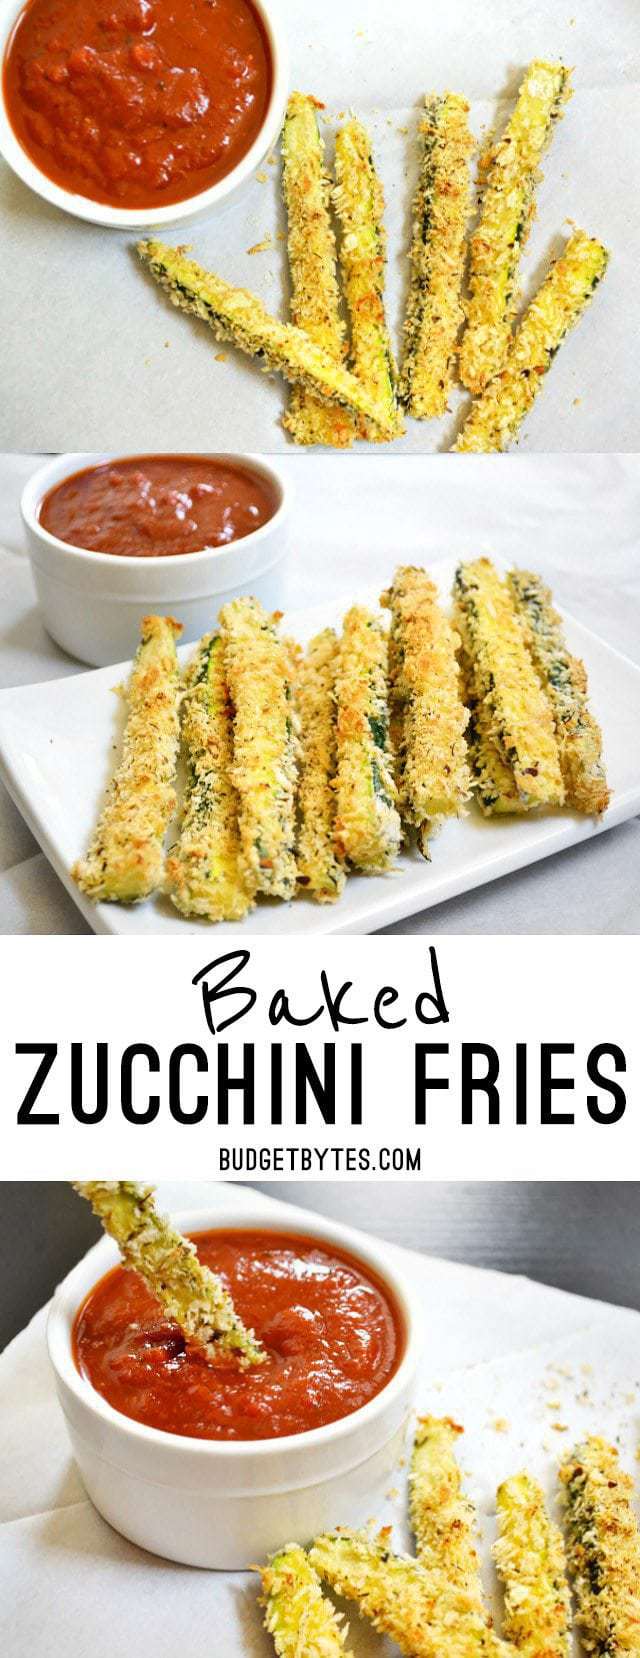 Baked Zucchini Fries - Budget Bytes